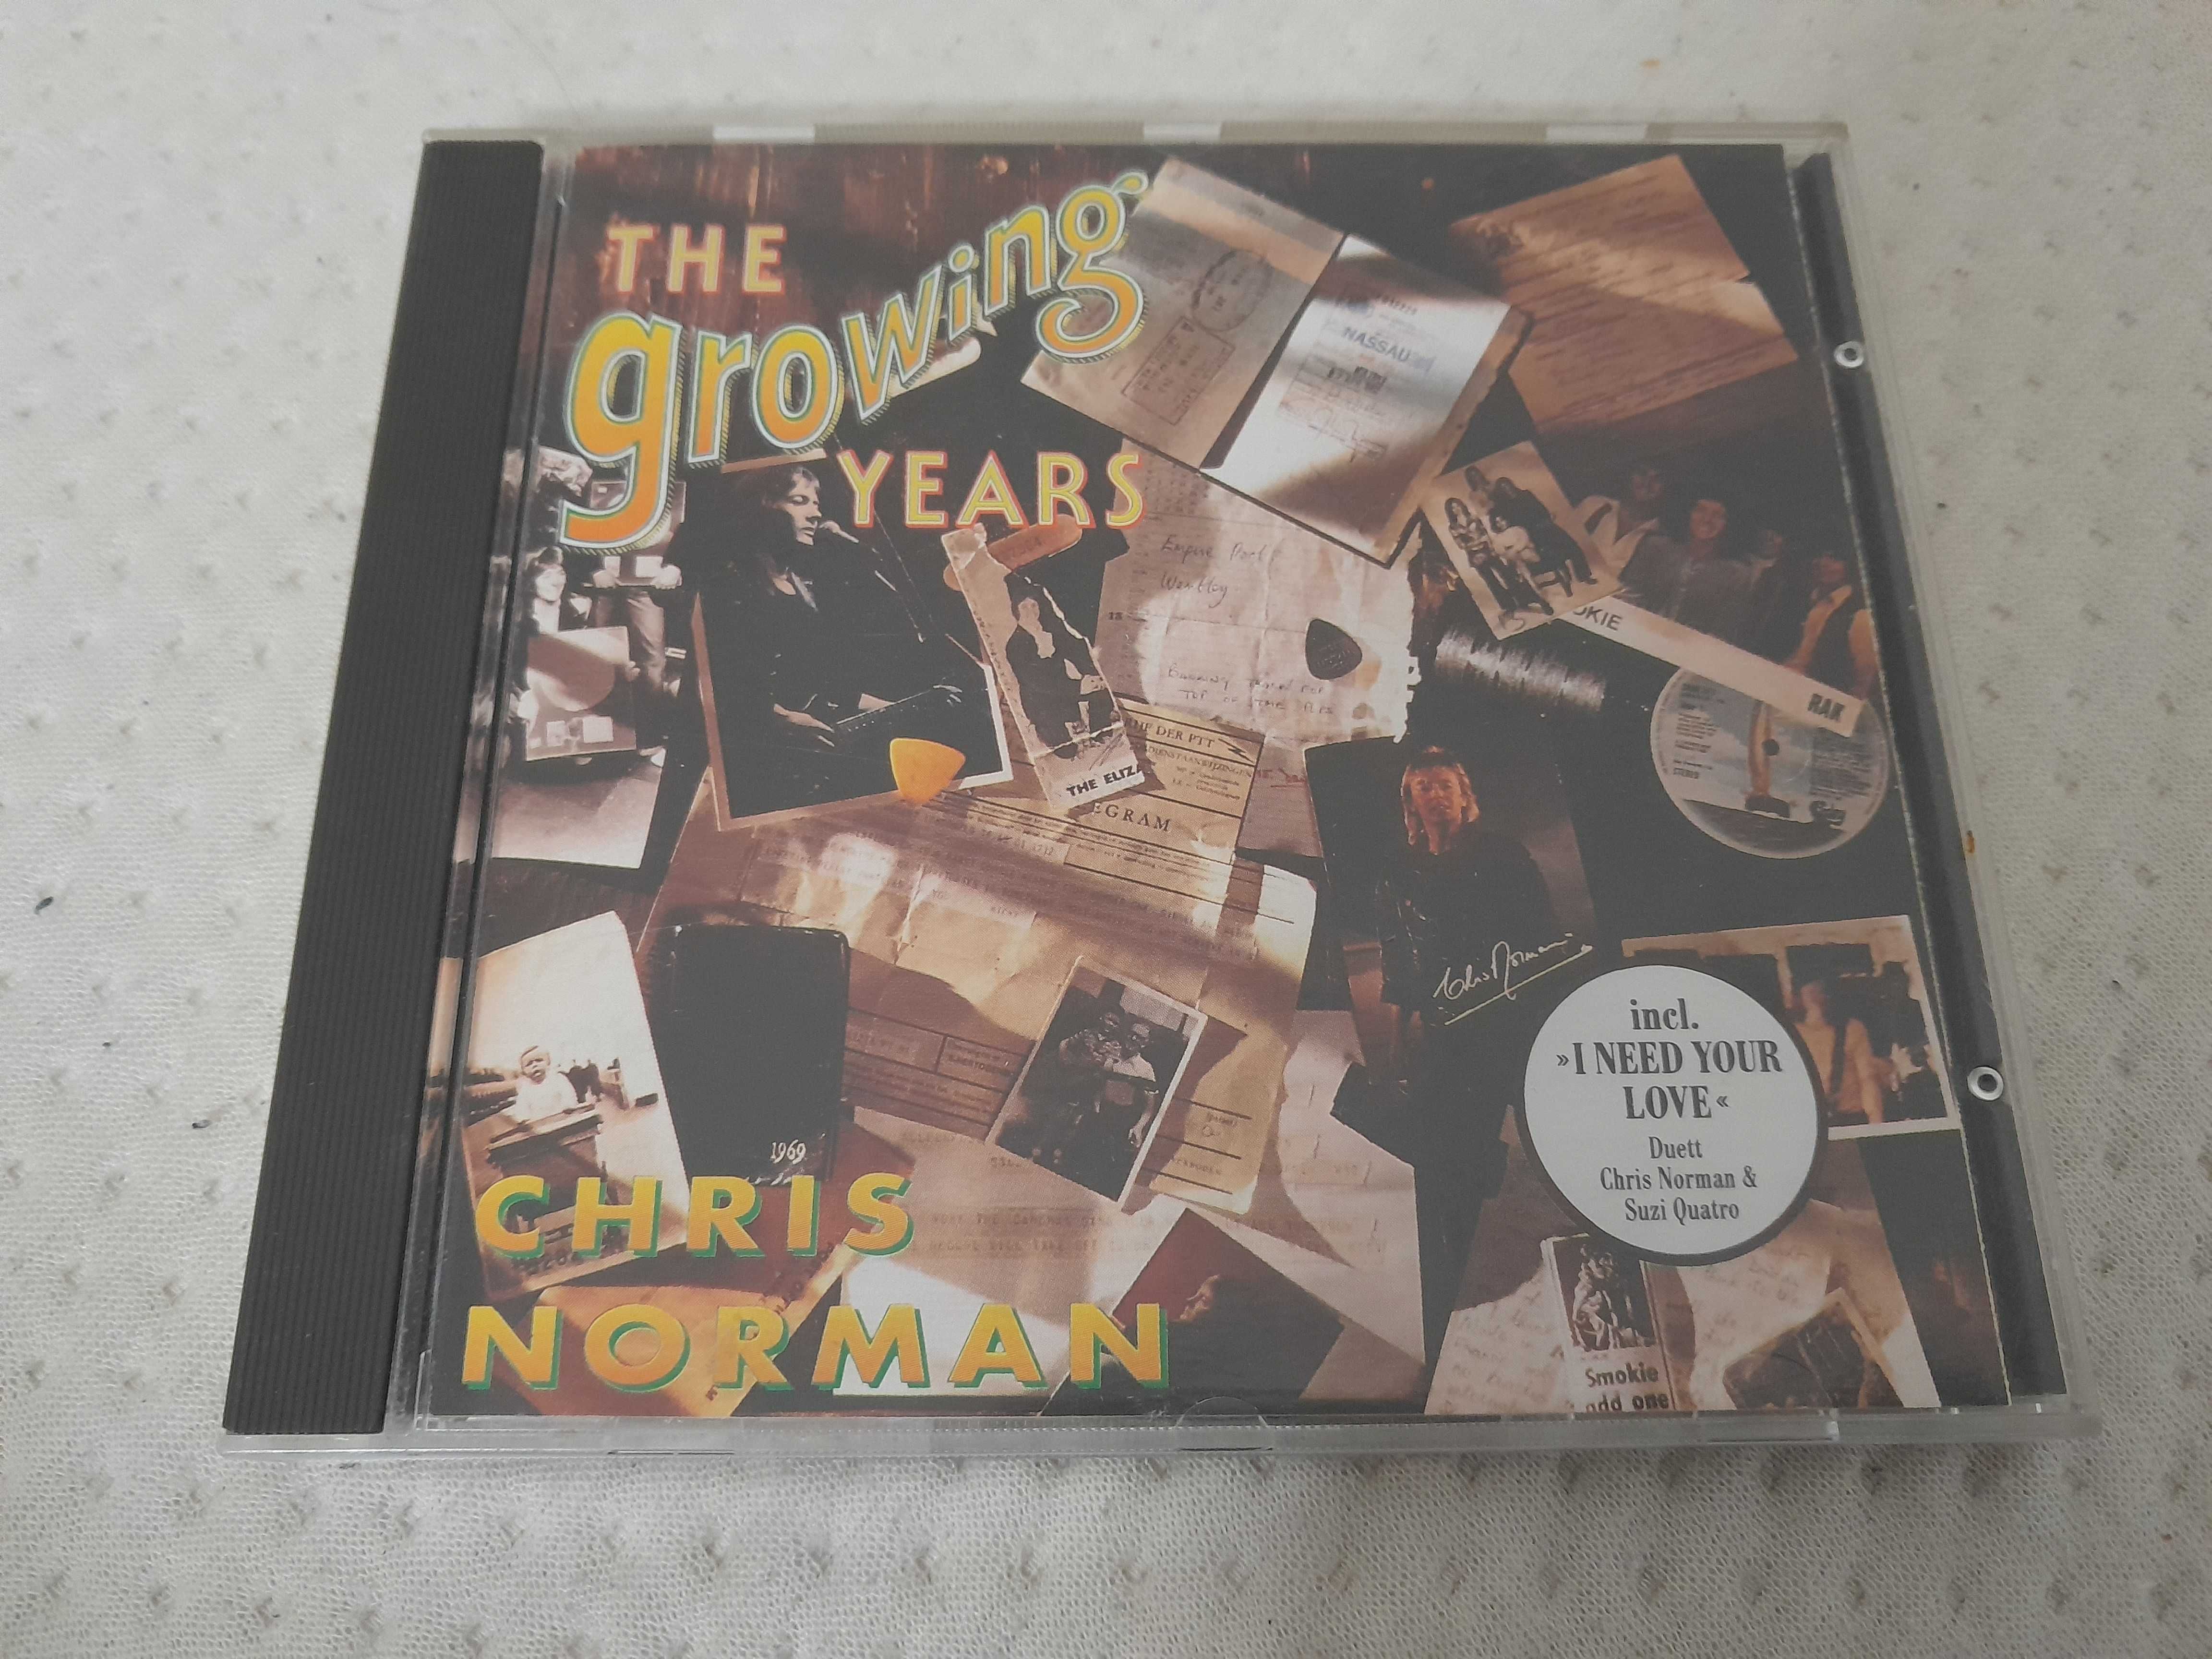 Chris Norman - The Growing Years - CD 1992 Smokie